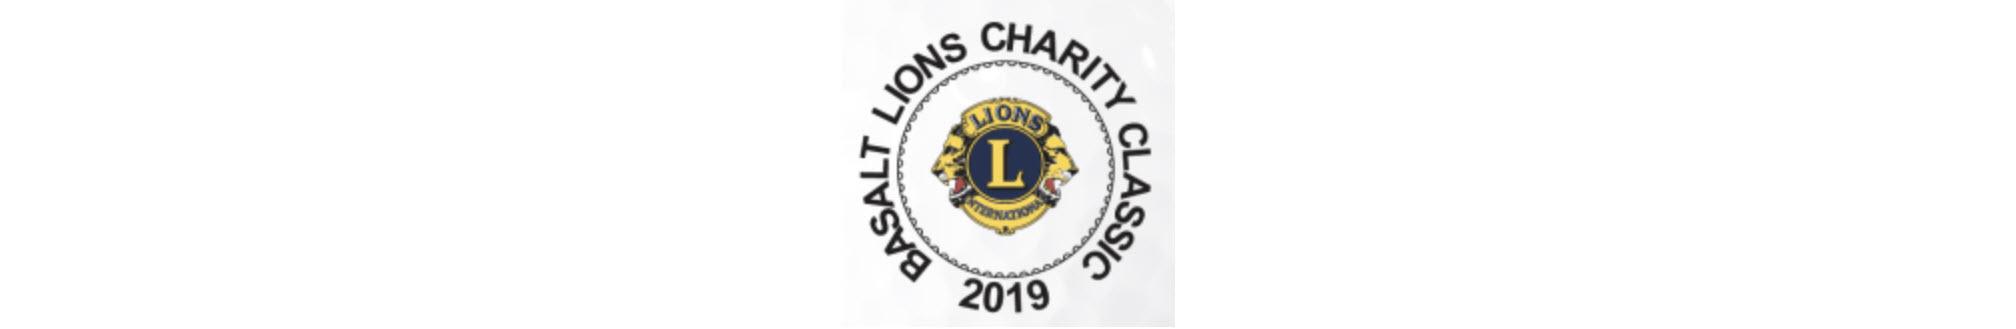 Basalt Lions Club 2019 Charity Golf Tournament